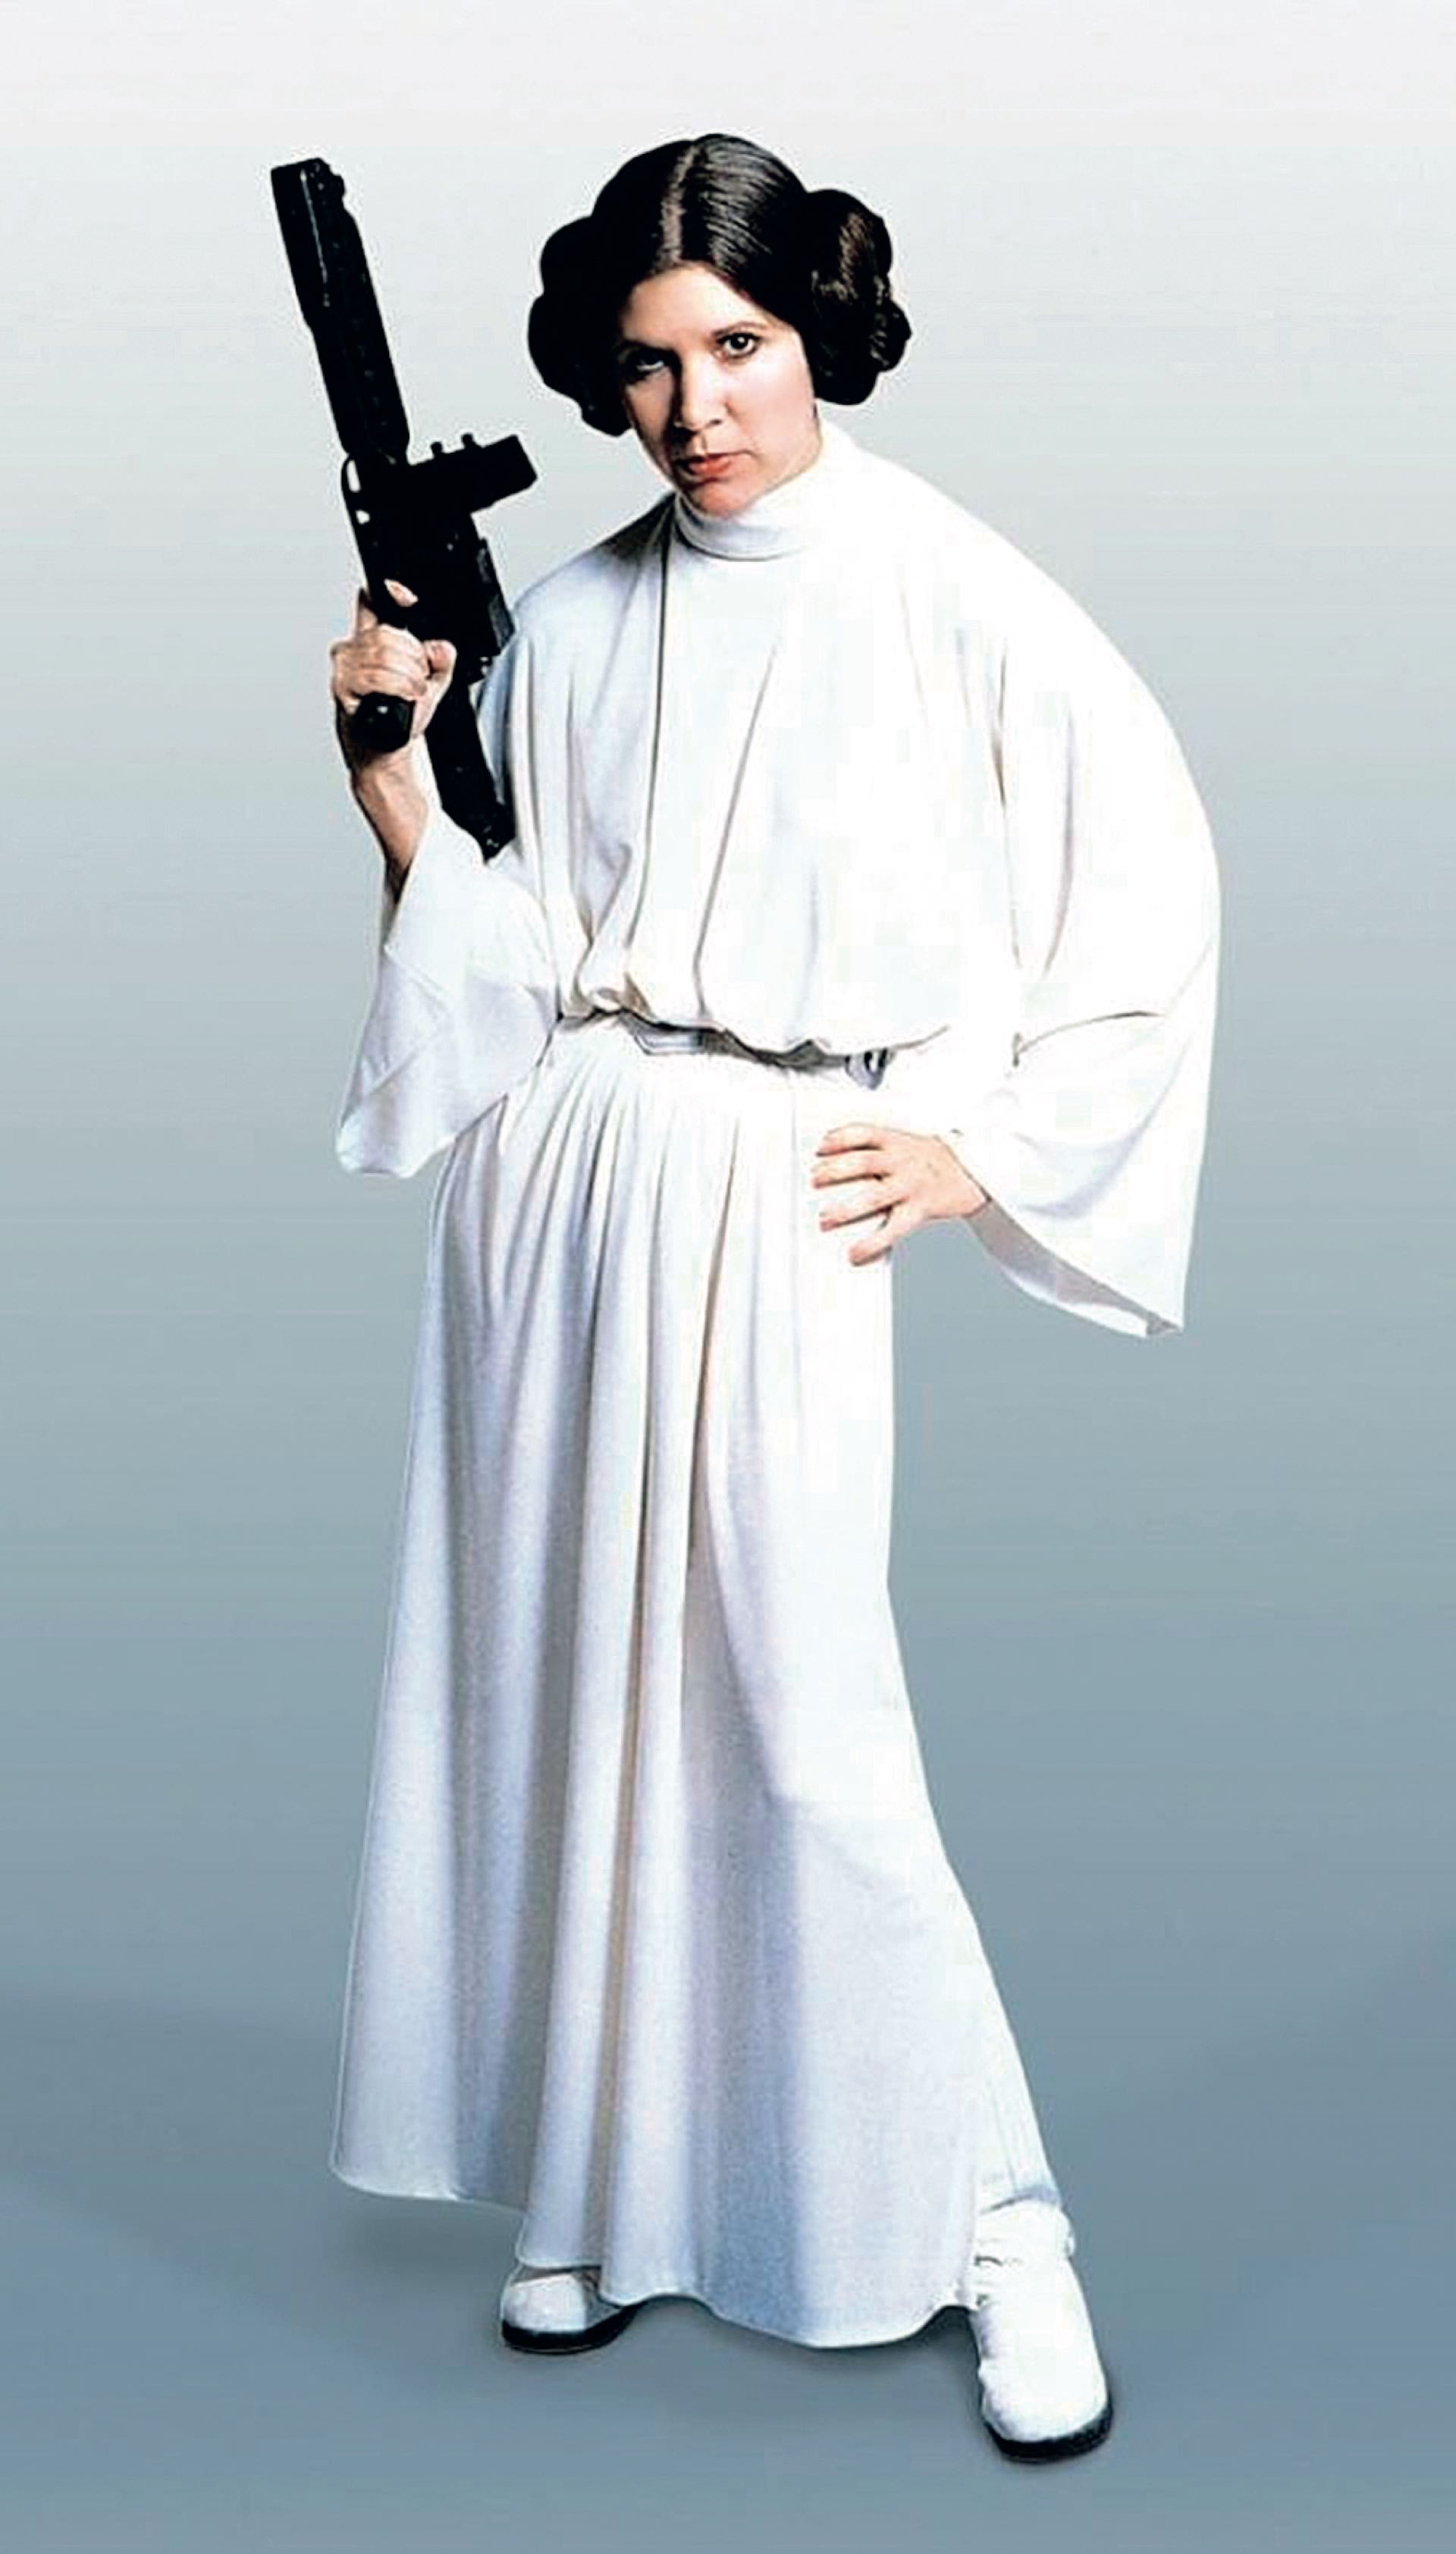 La princesa Leia interpretada por Carrie Fisher